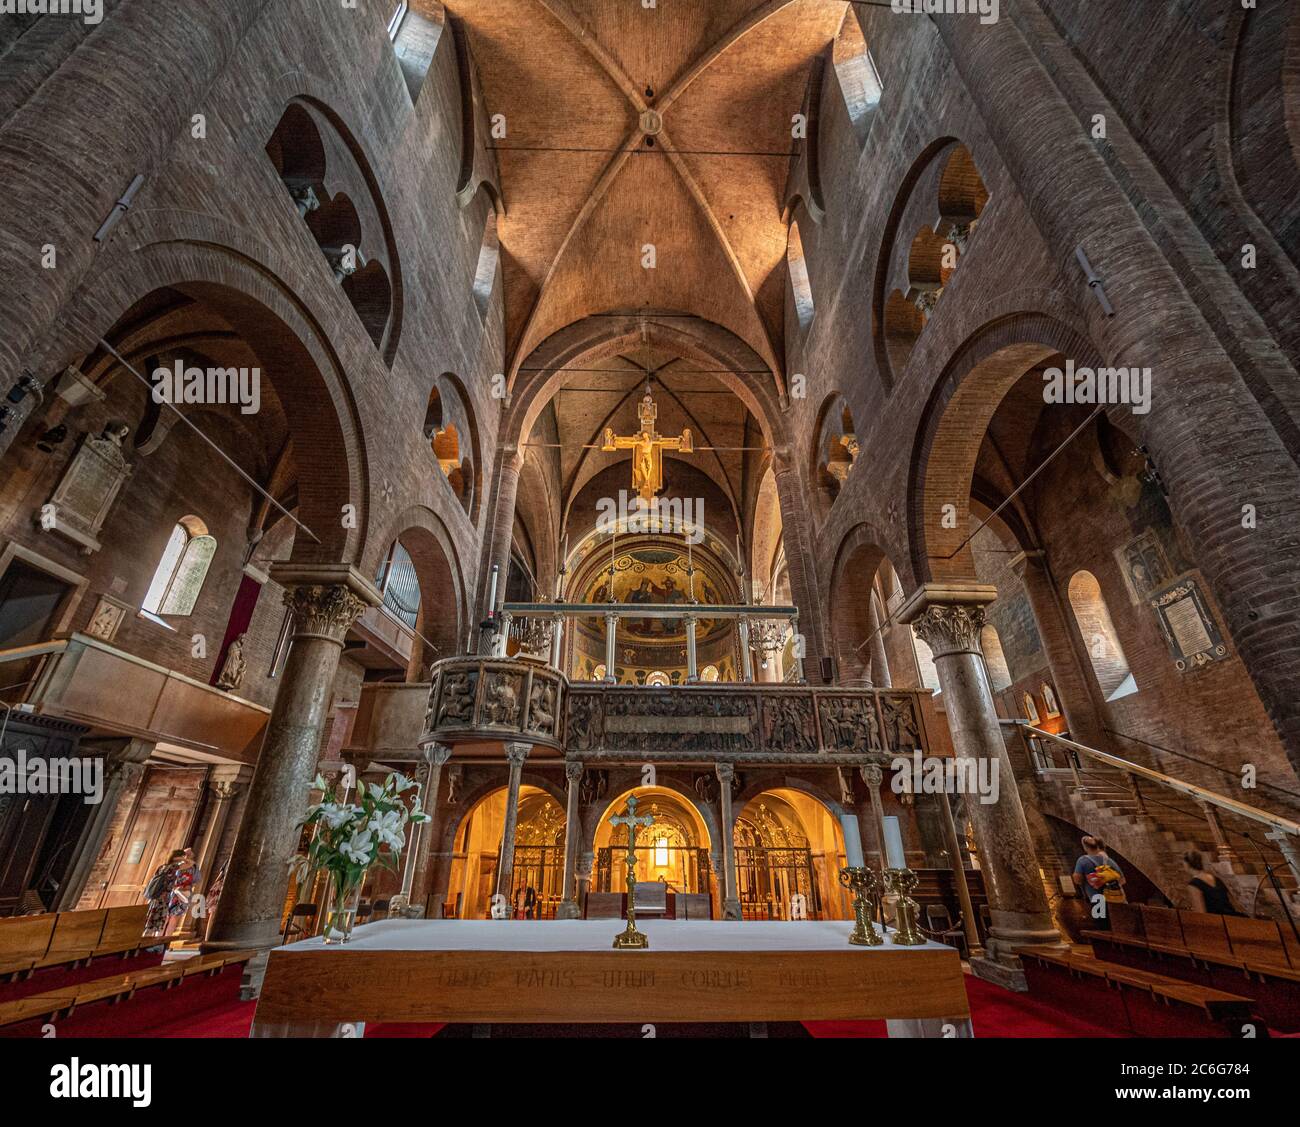 Interior of Modena Cathedral. Italy. Stock Photo